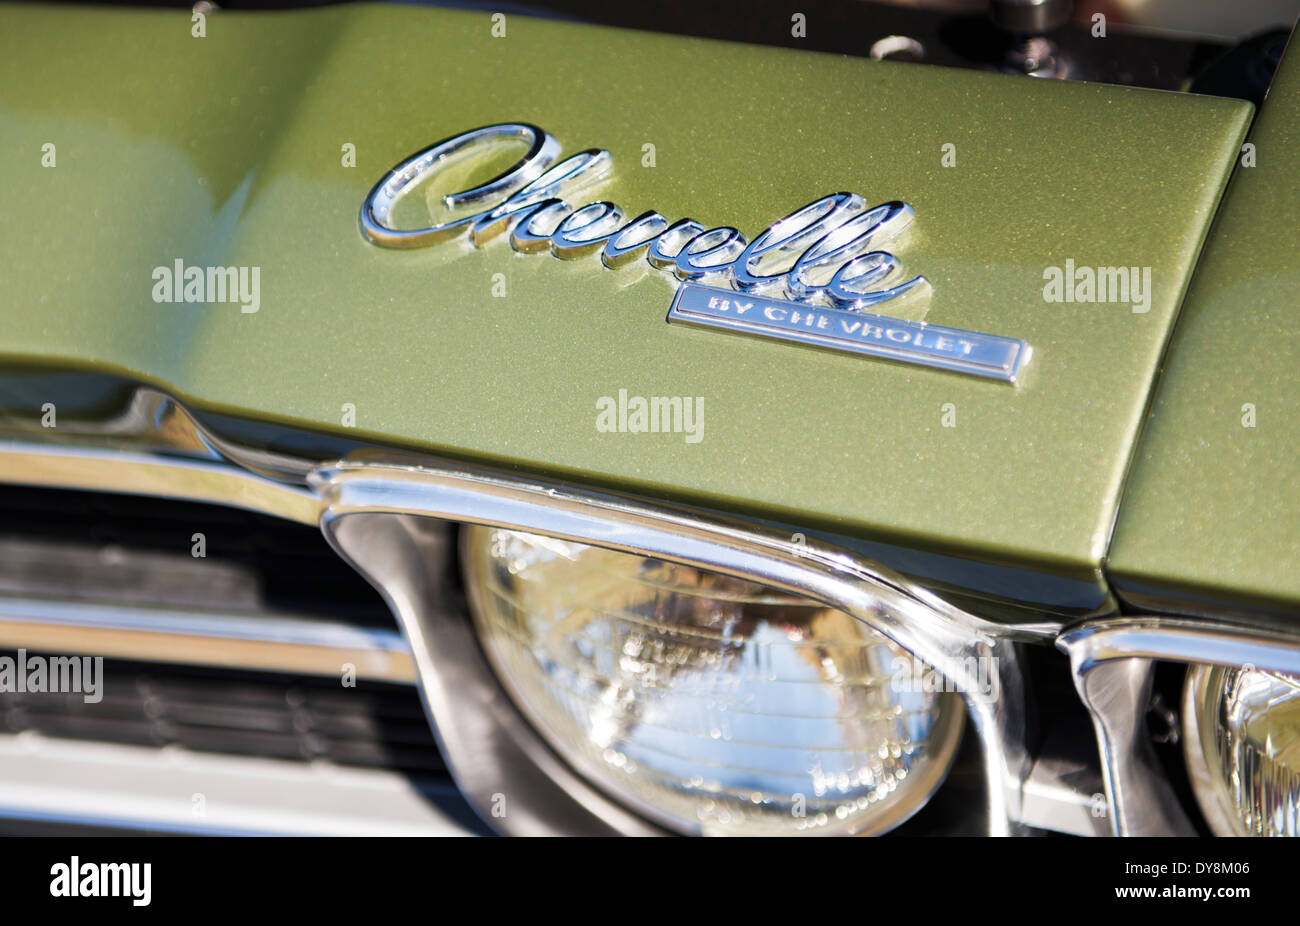 Chevrolet Chevelle emblem Stock Photo